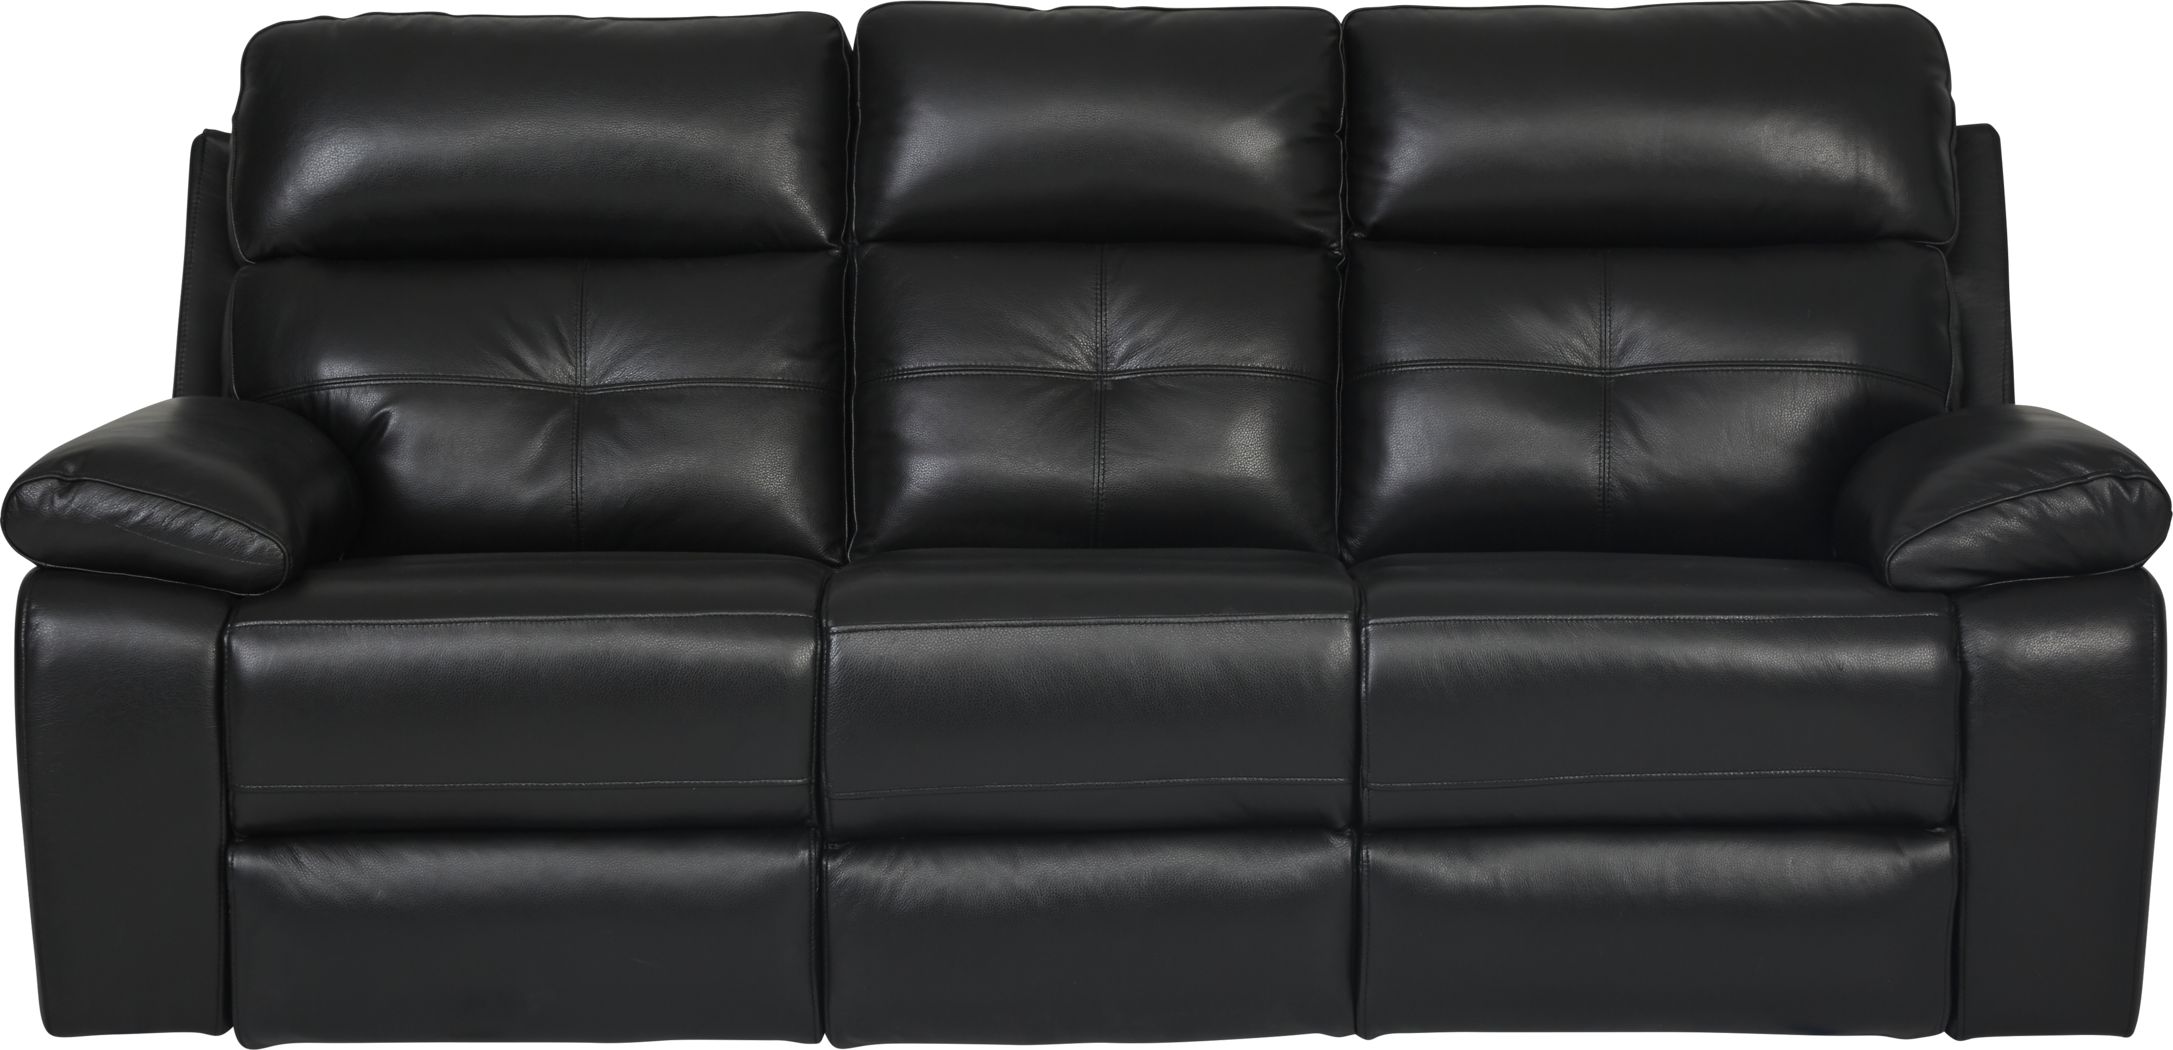 Leather Living Room Furniture, Sofa Leather Black